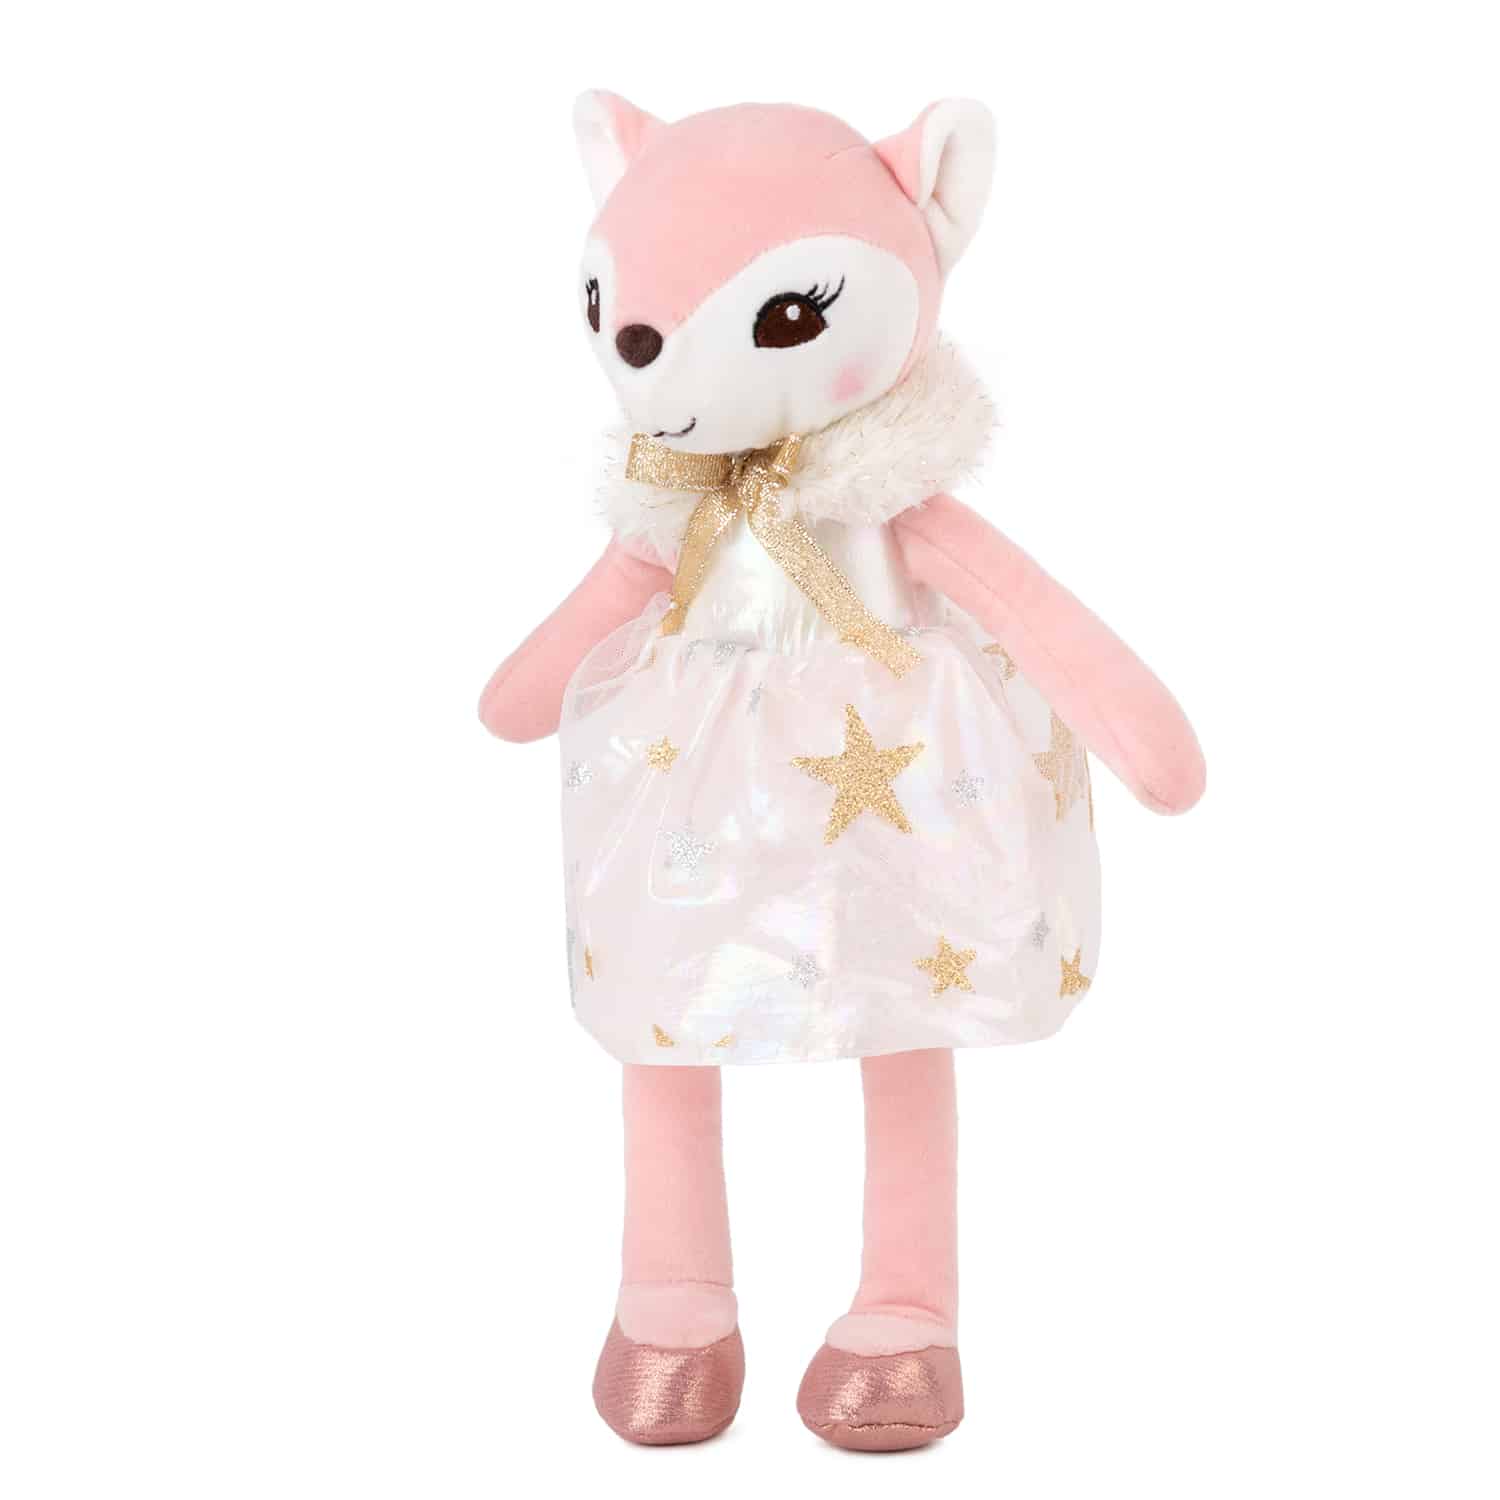 Fox with glitter dress